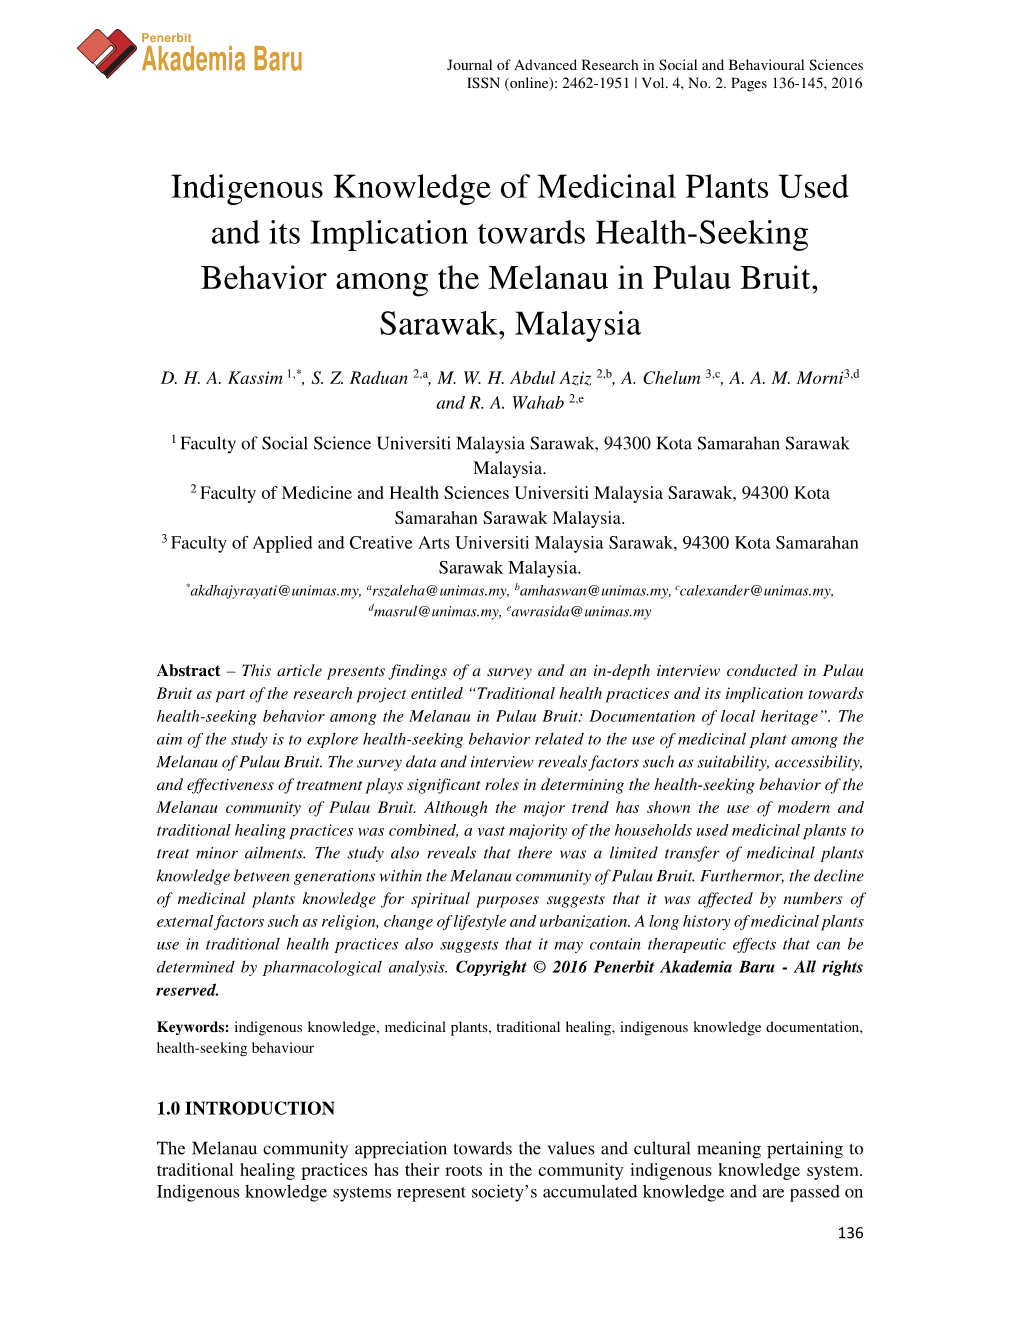 Akademia Baru Indigenous Knowledge of Medicinal Plants Used and Its Implication Towards Health-Seeking Behavior Among the Melana